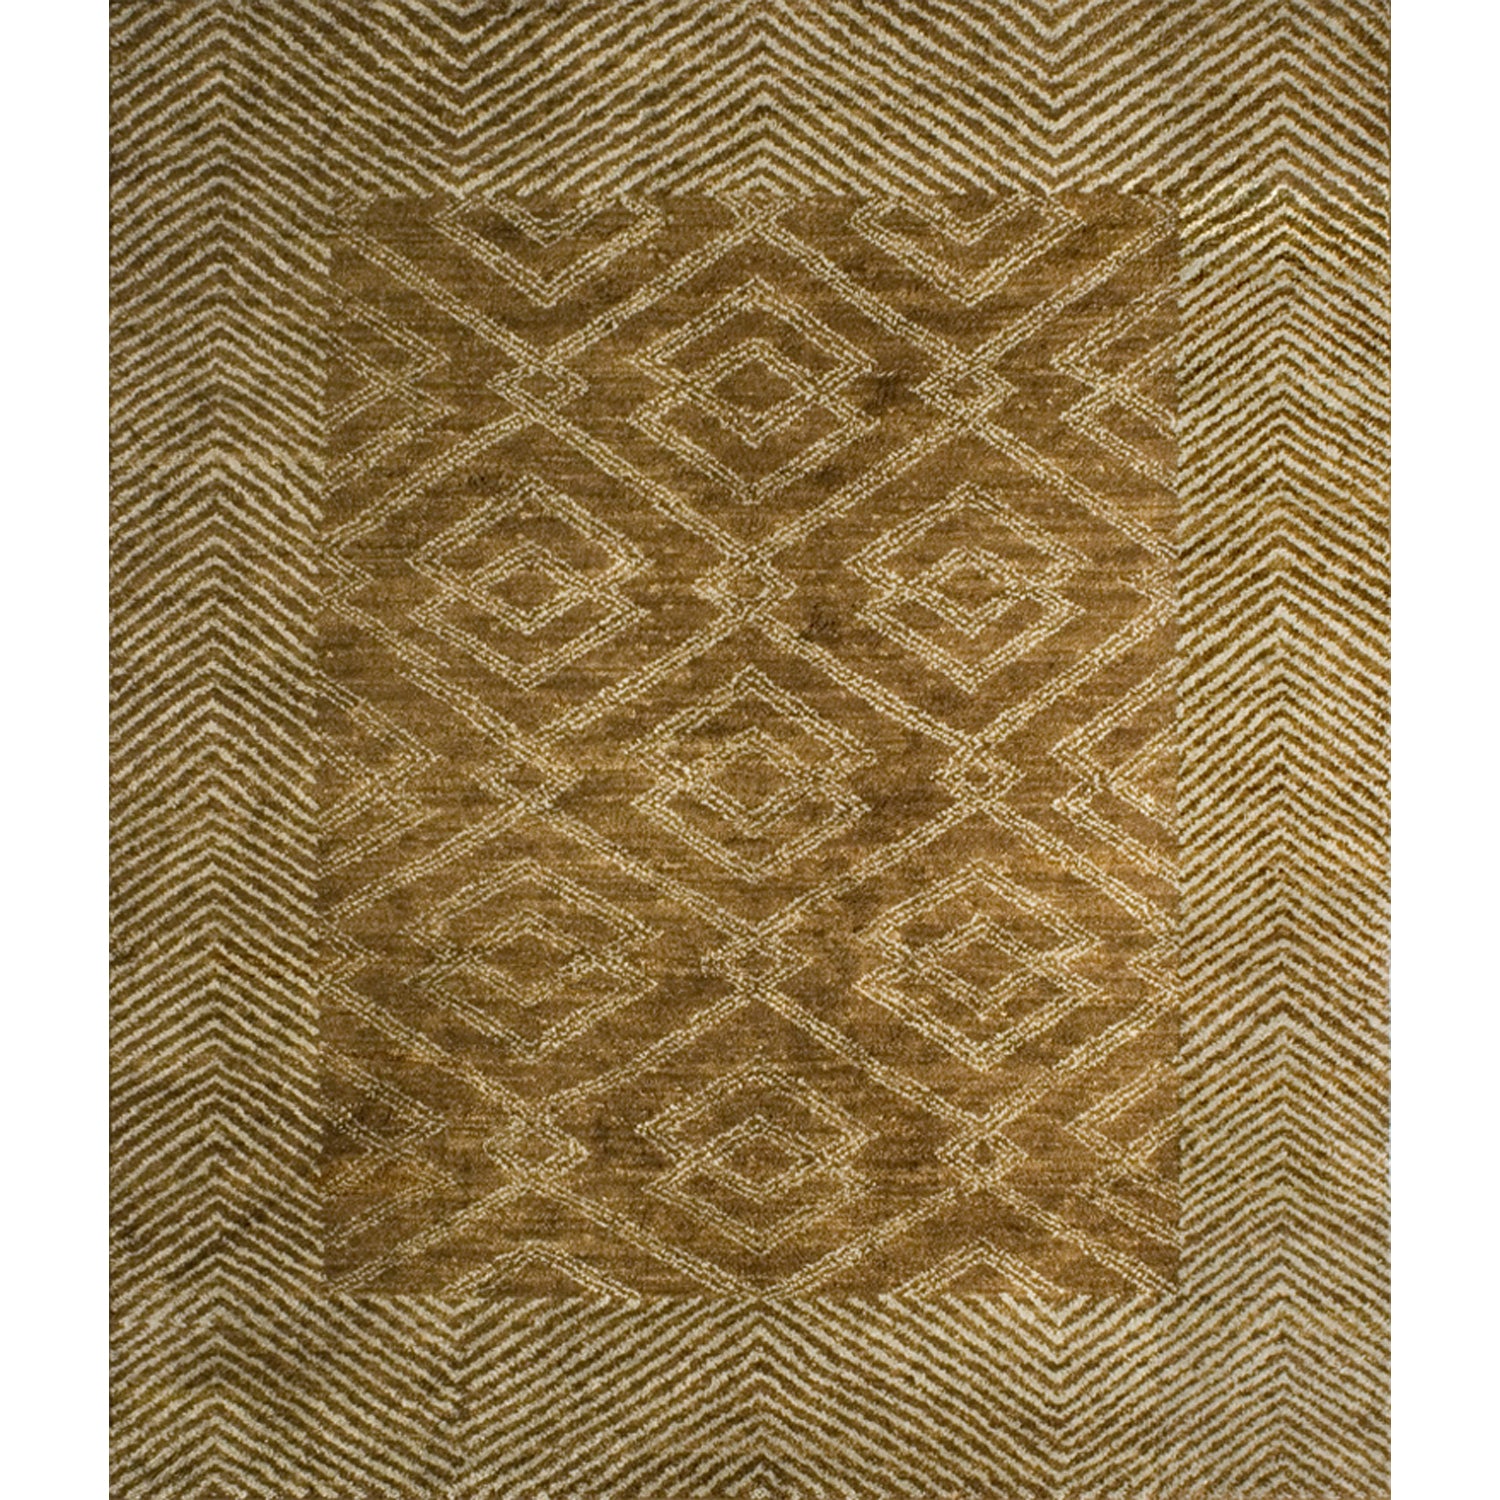 Rectangular high-pile rug in an interlocking diamond pattern with a dense stripe border. Pattern is white on a tan field.